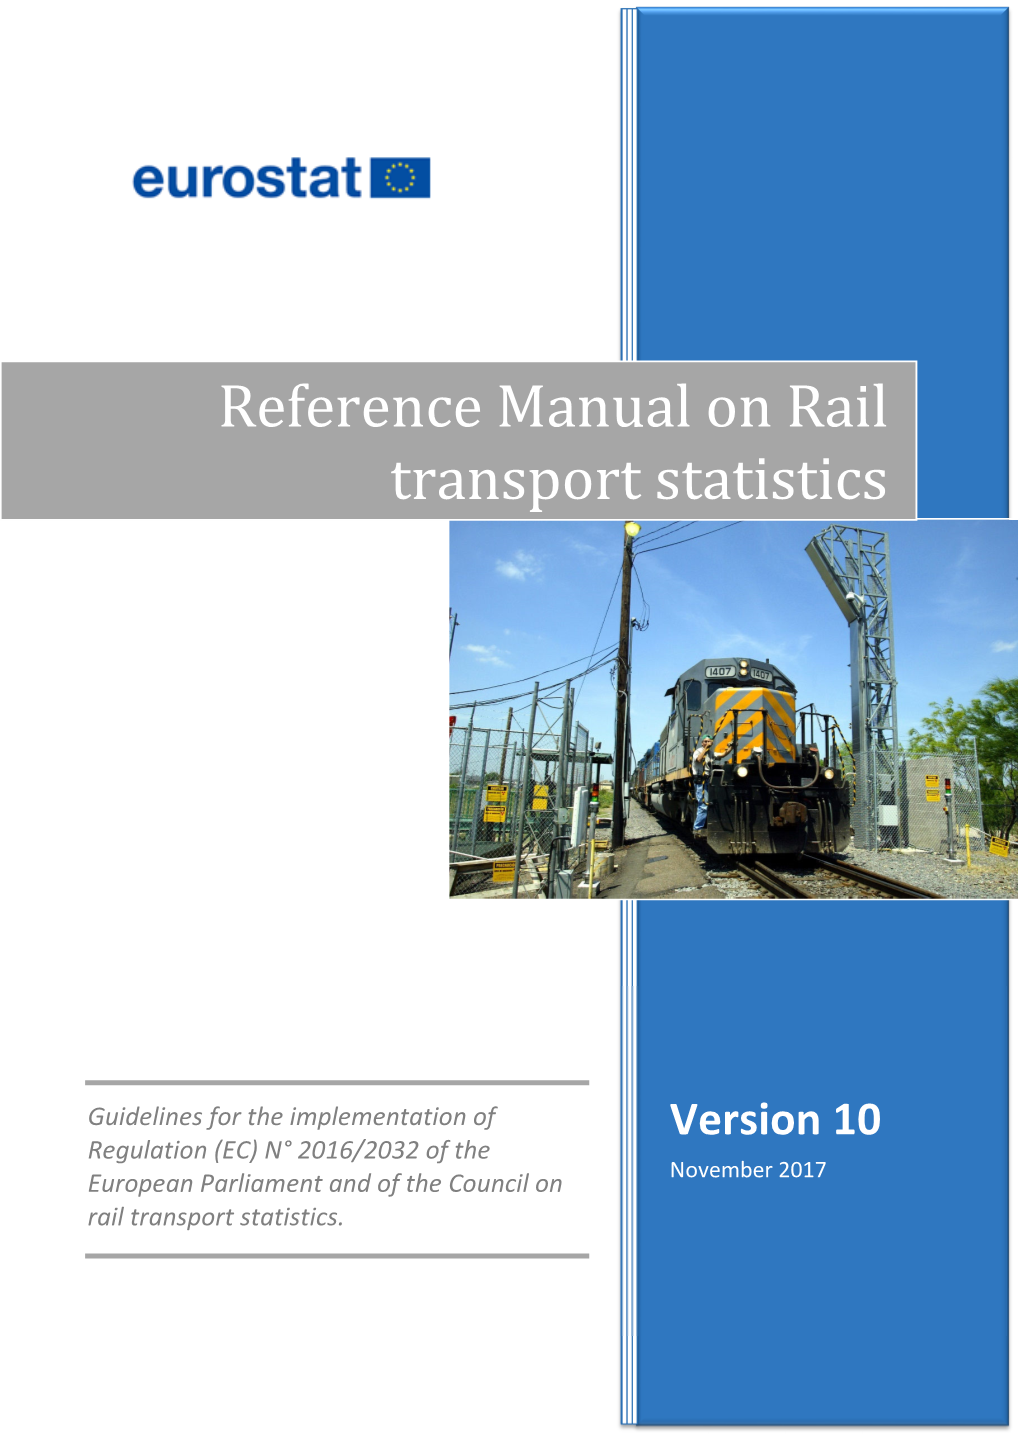 Reference Manual on Rail Transport Statistics